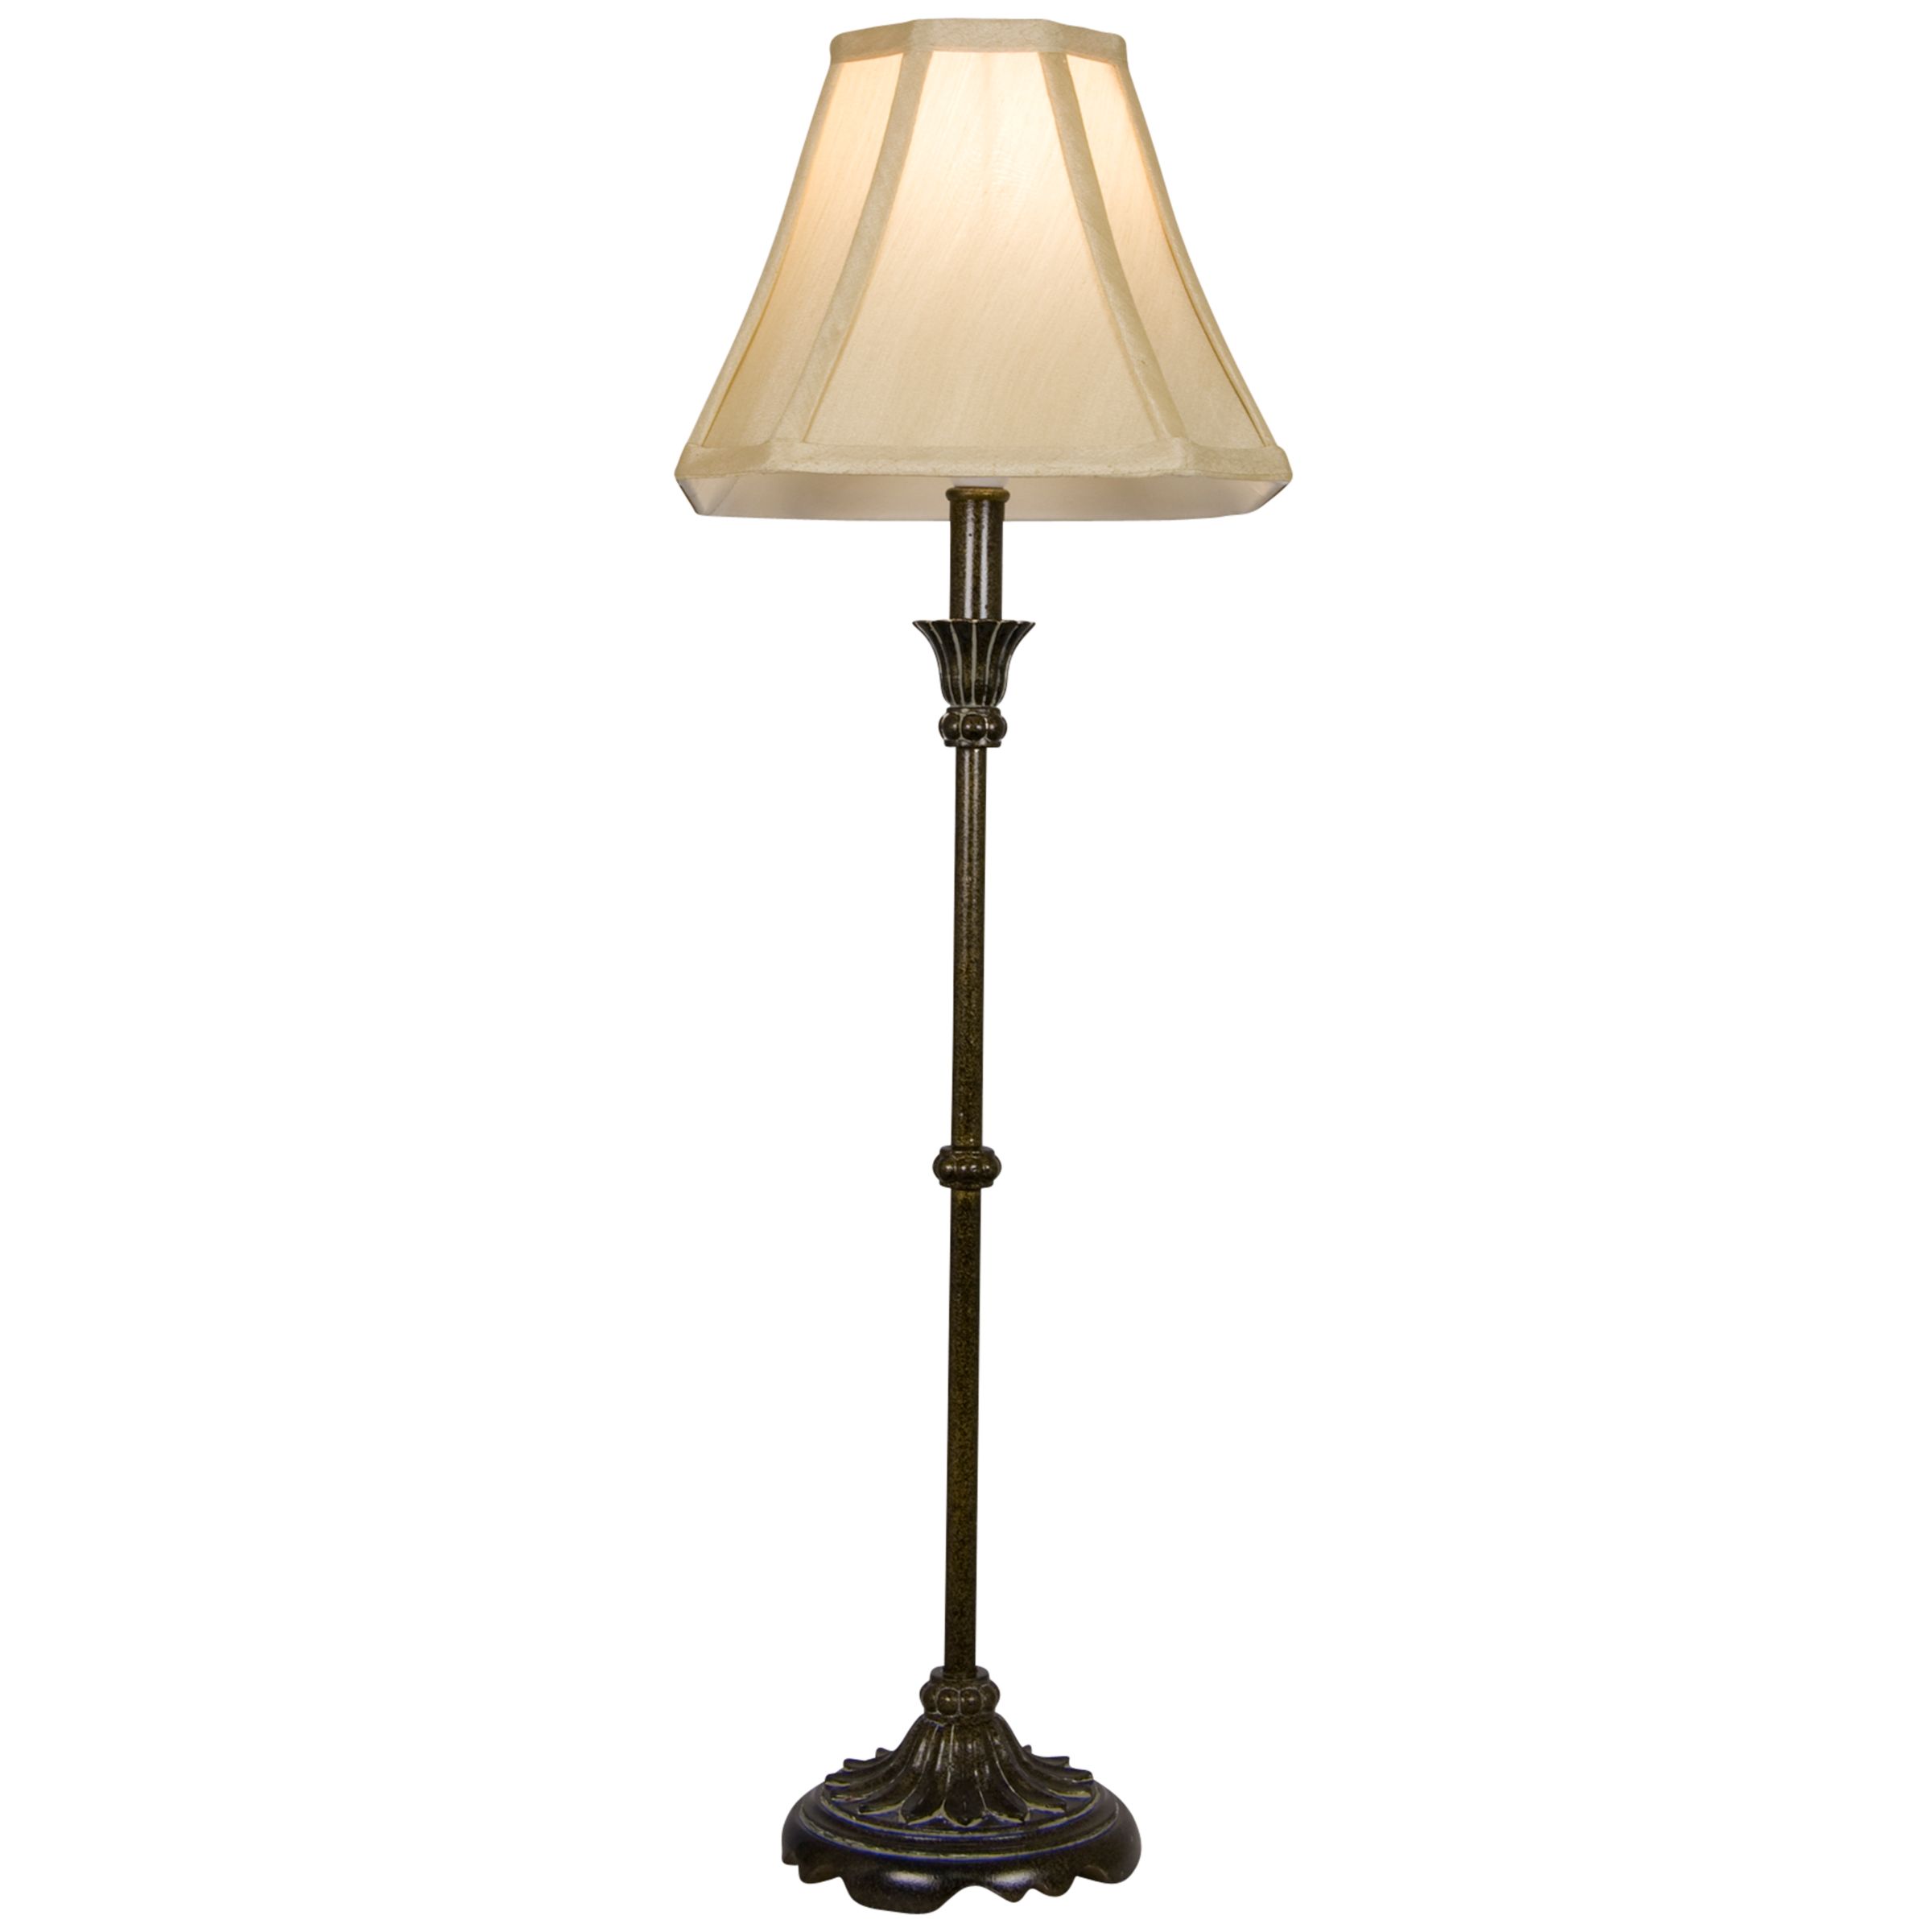 John Lewis Elizabeth Table Lamp